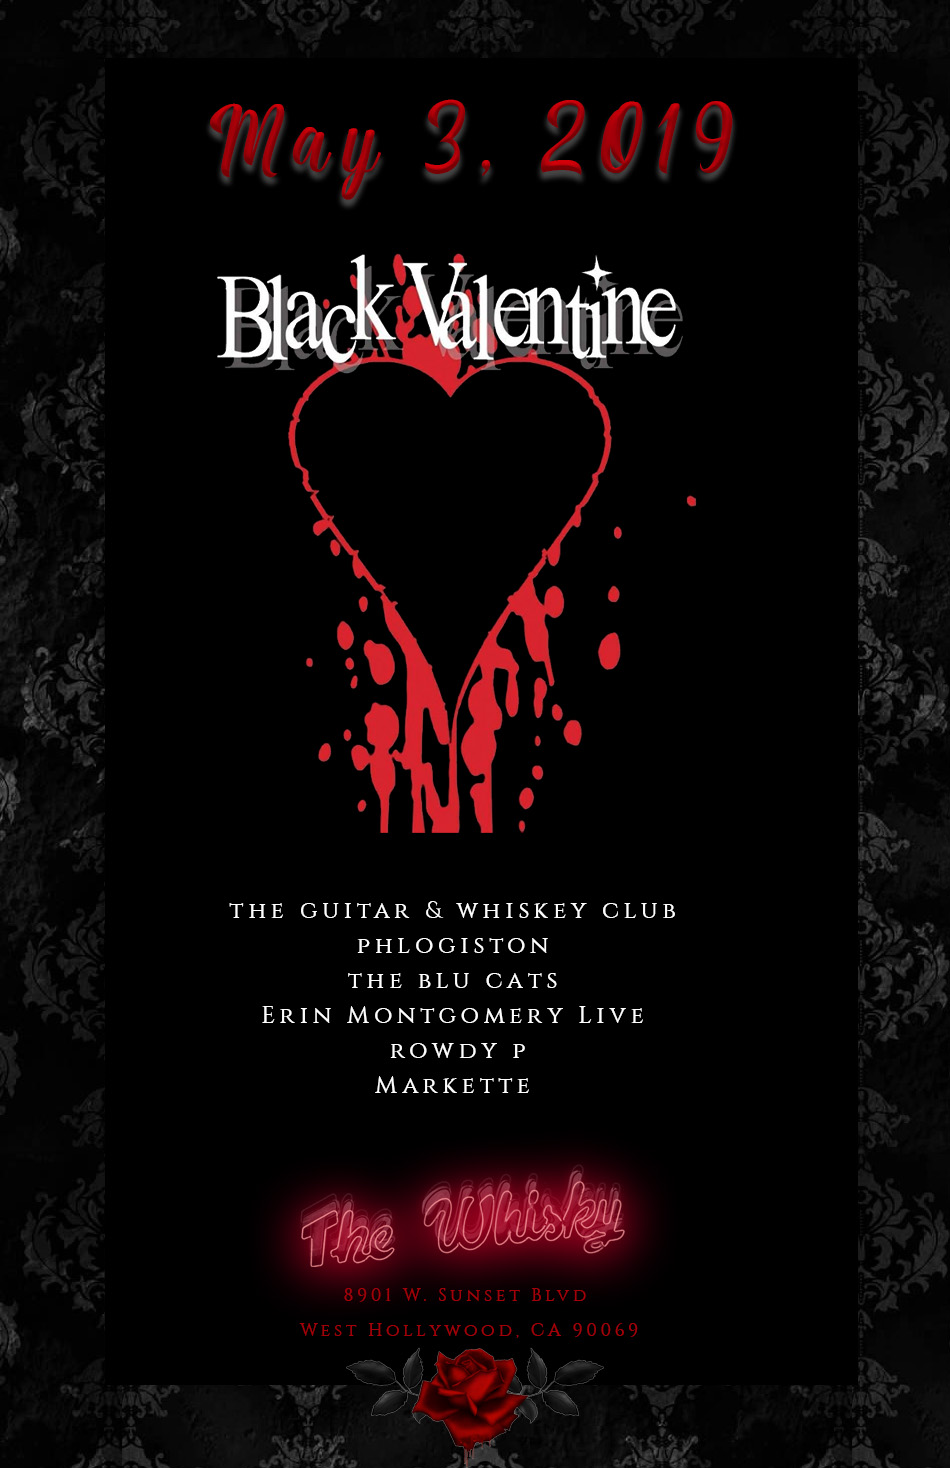 Black Valentine